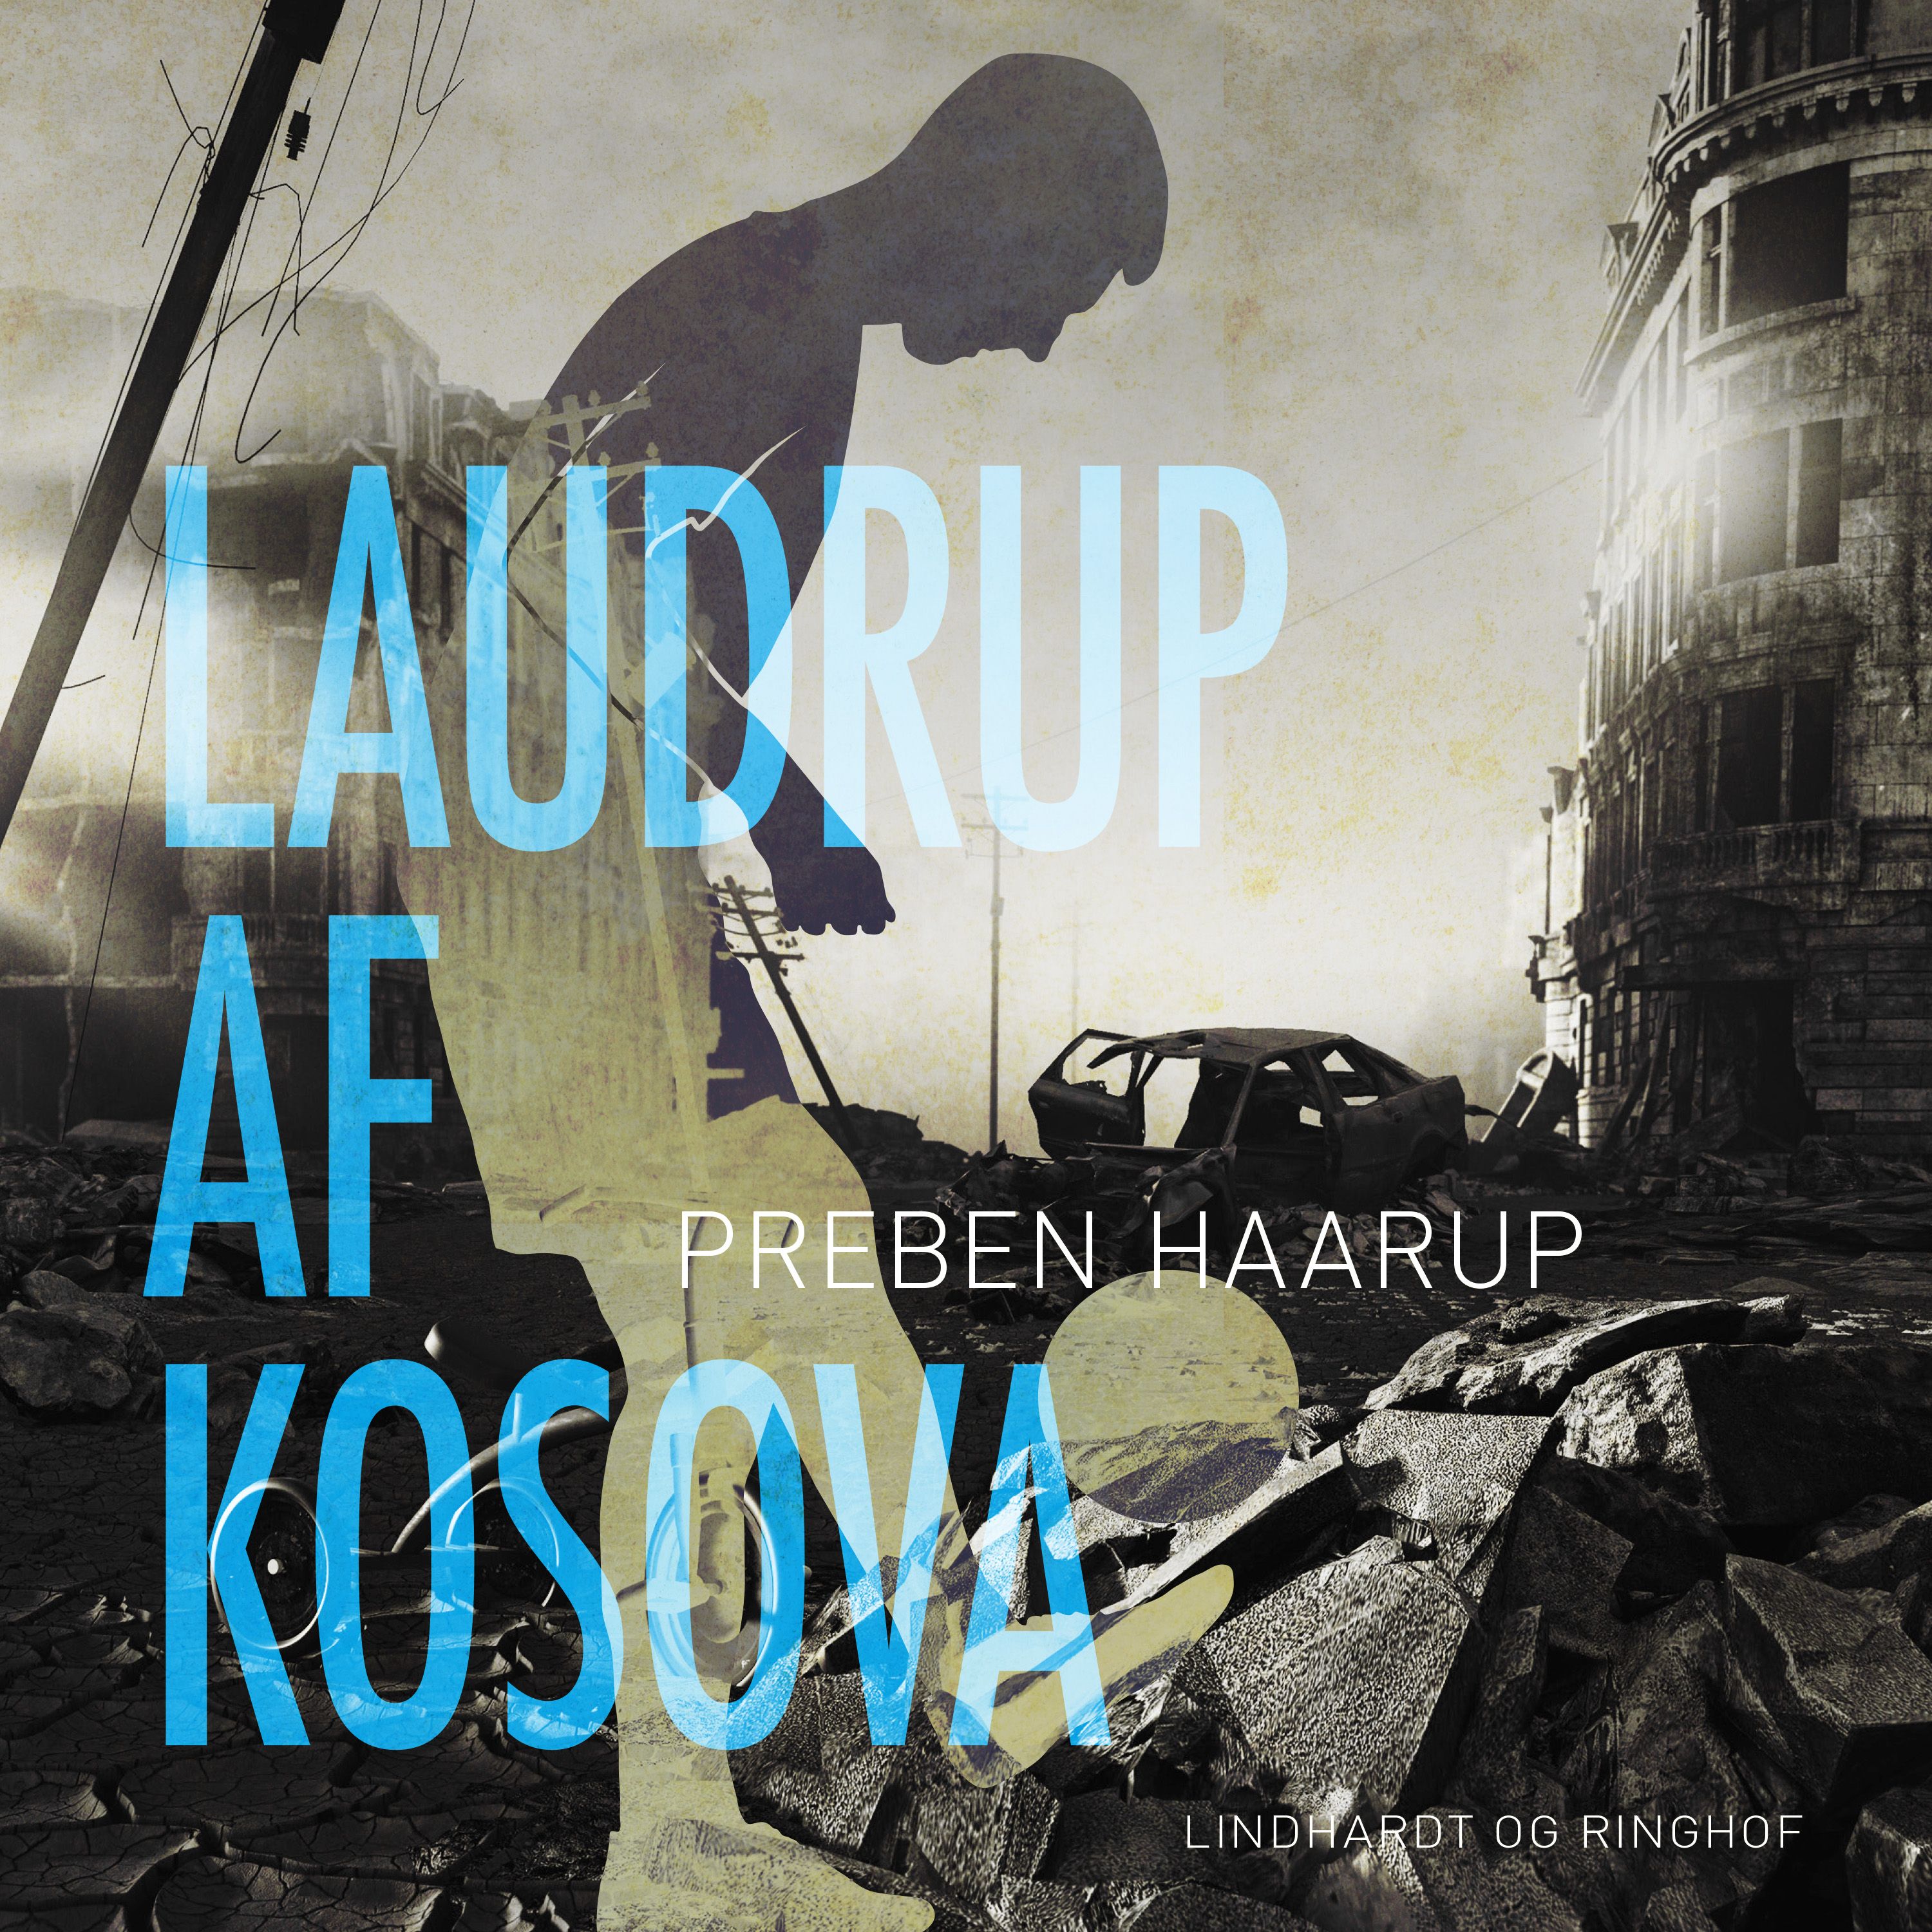 Laudrup af Kosova, ljudbok av Preben Haarup